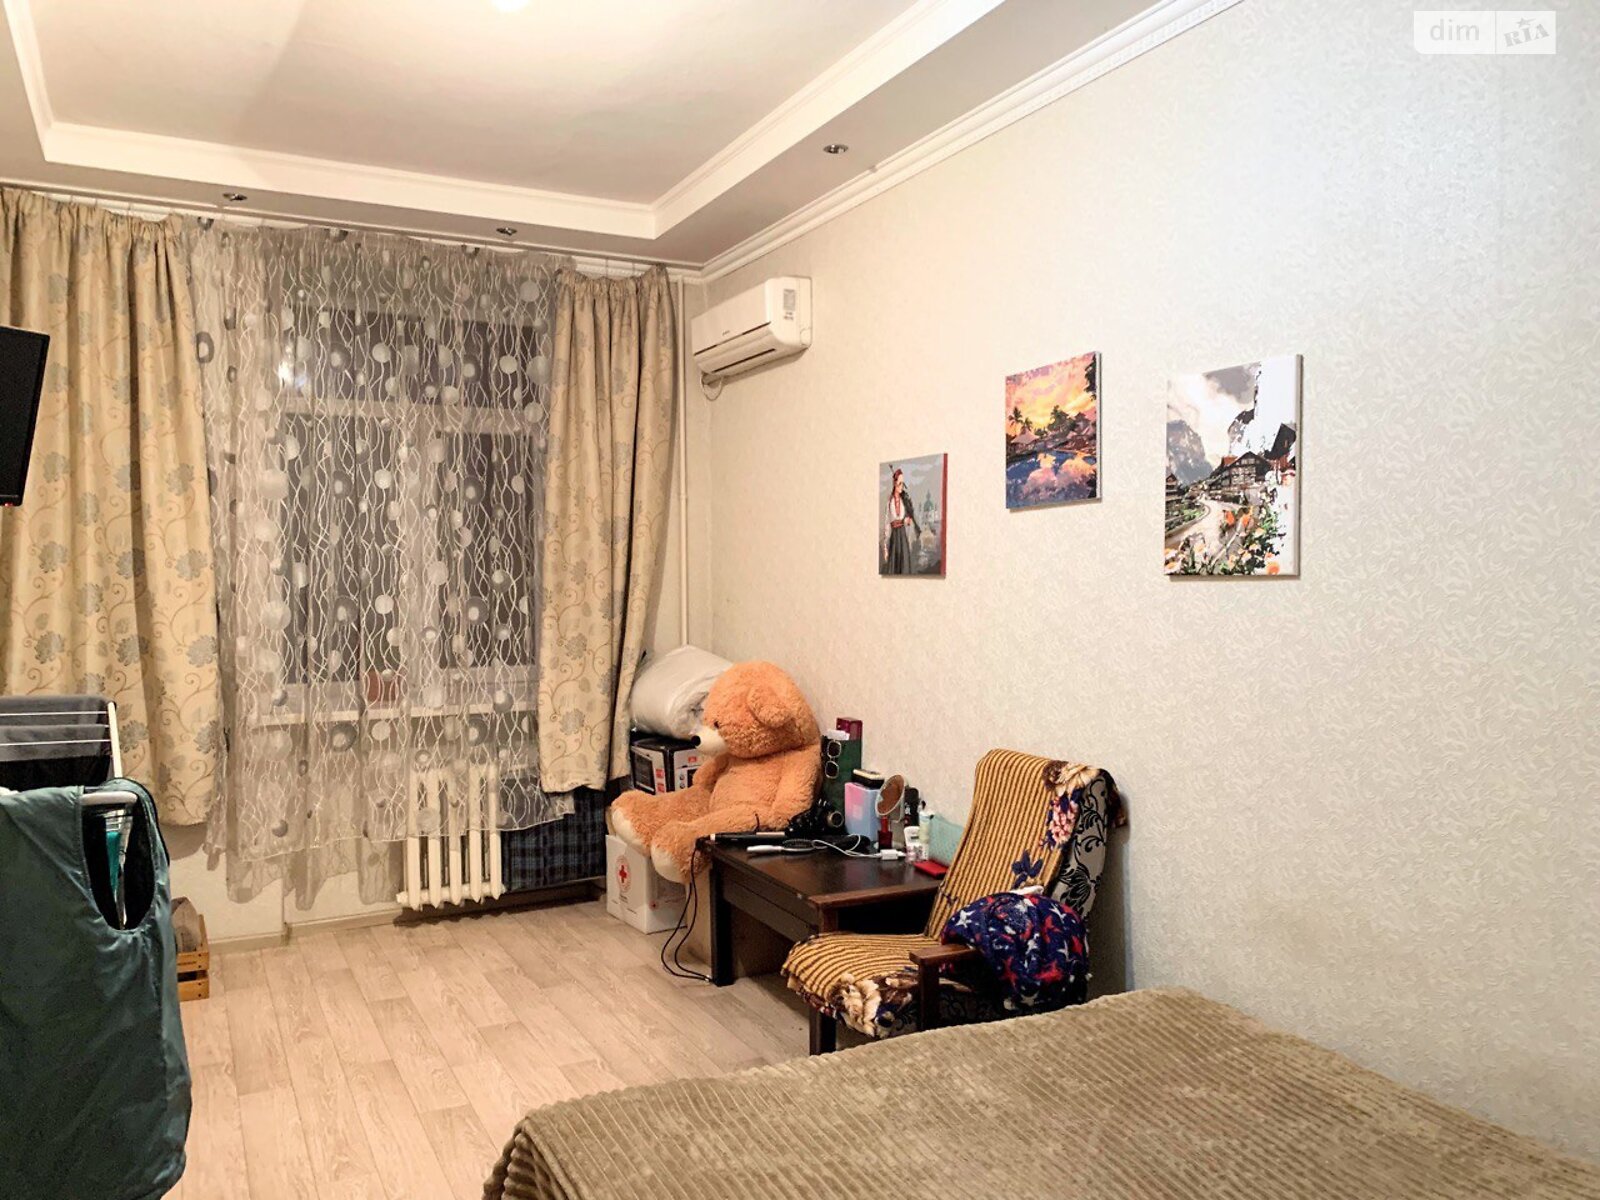 Продажа двухкомнатной квартиры в Николаеве, на ул. Лягина, район Центр фото 1